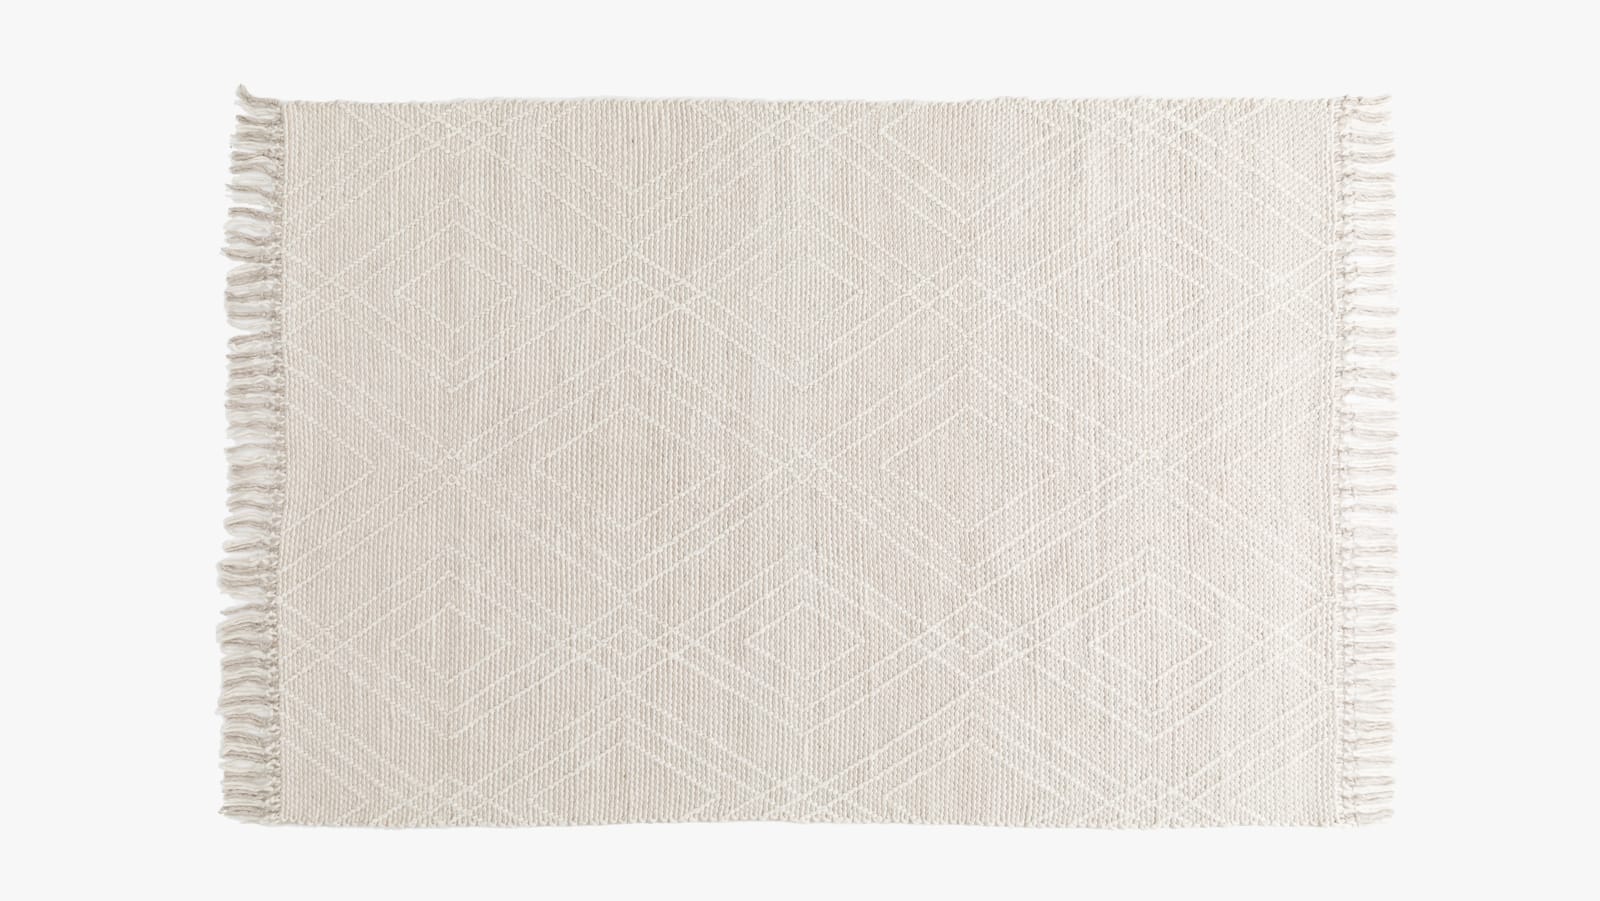 The Noa Peru rug